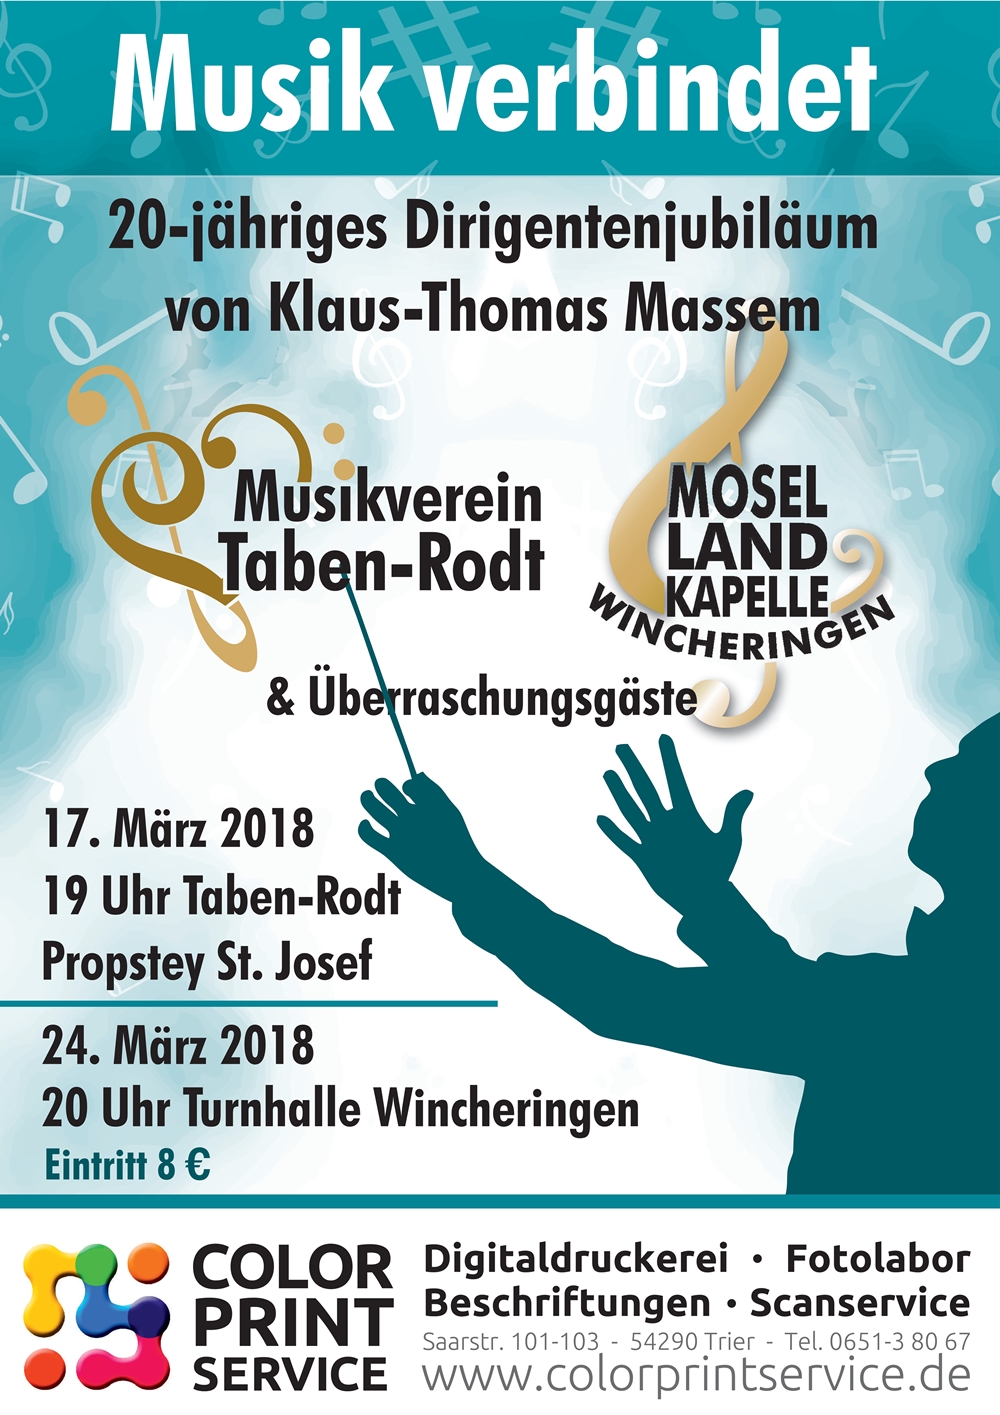 Frhlingskonzert Musikverein Taben-Rodt, Programm-Flyer